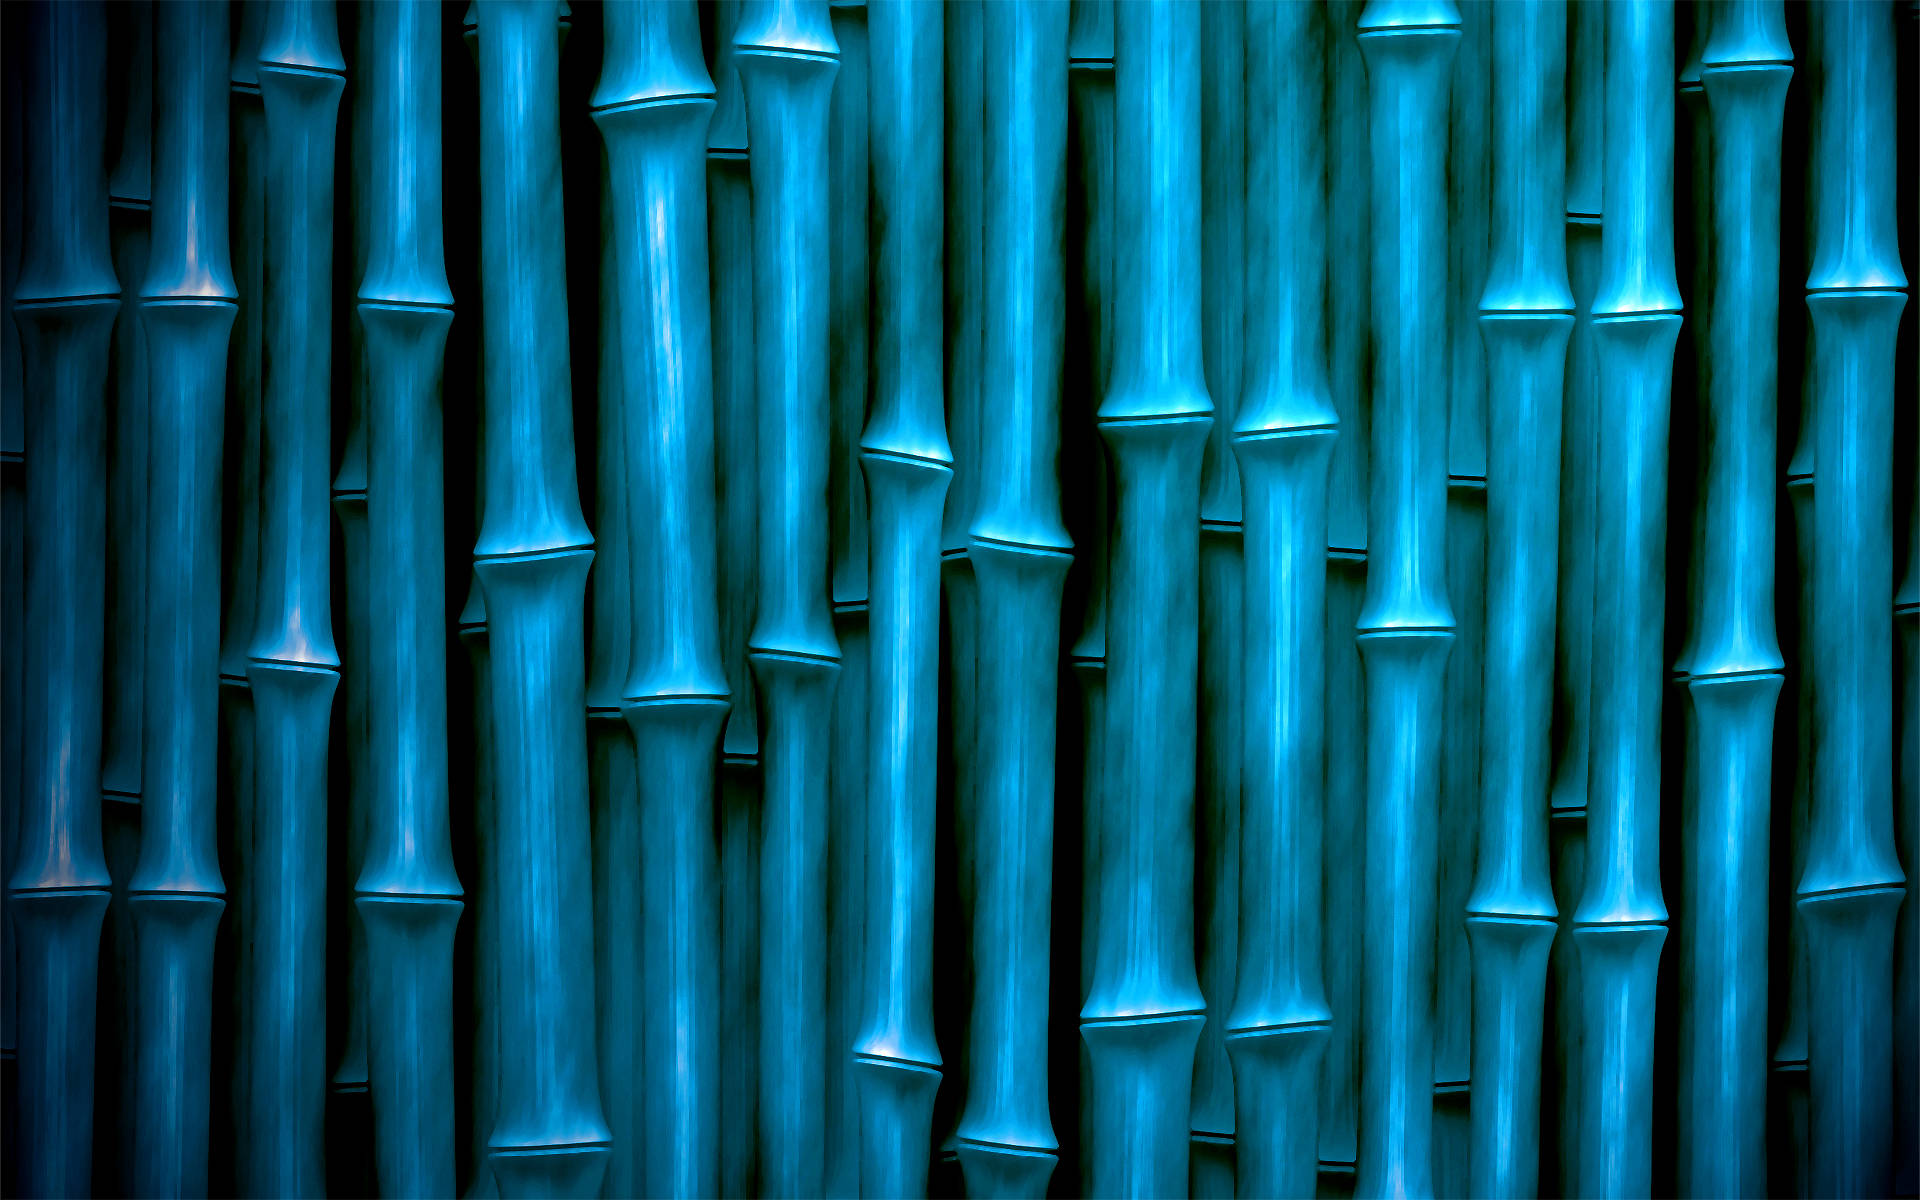 Blue-tinged Bamboo Hd Wallpaper